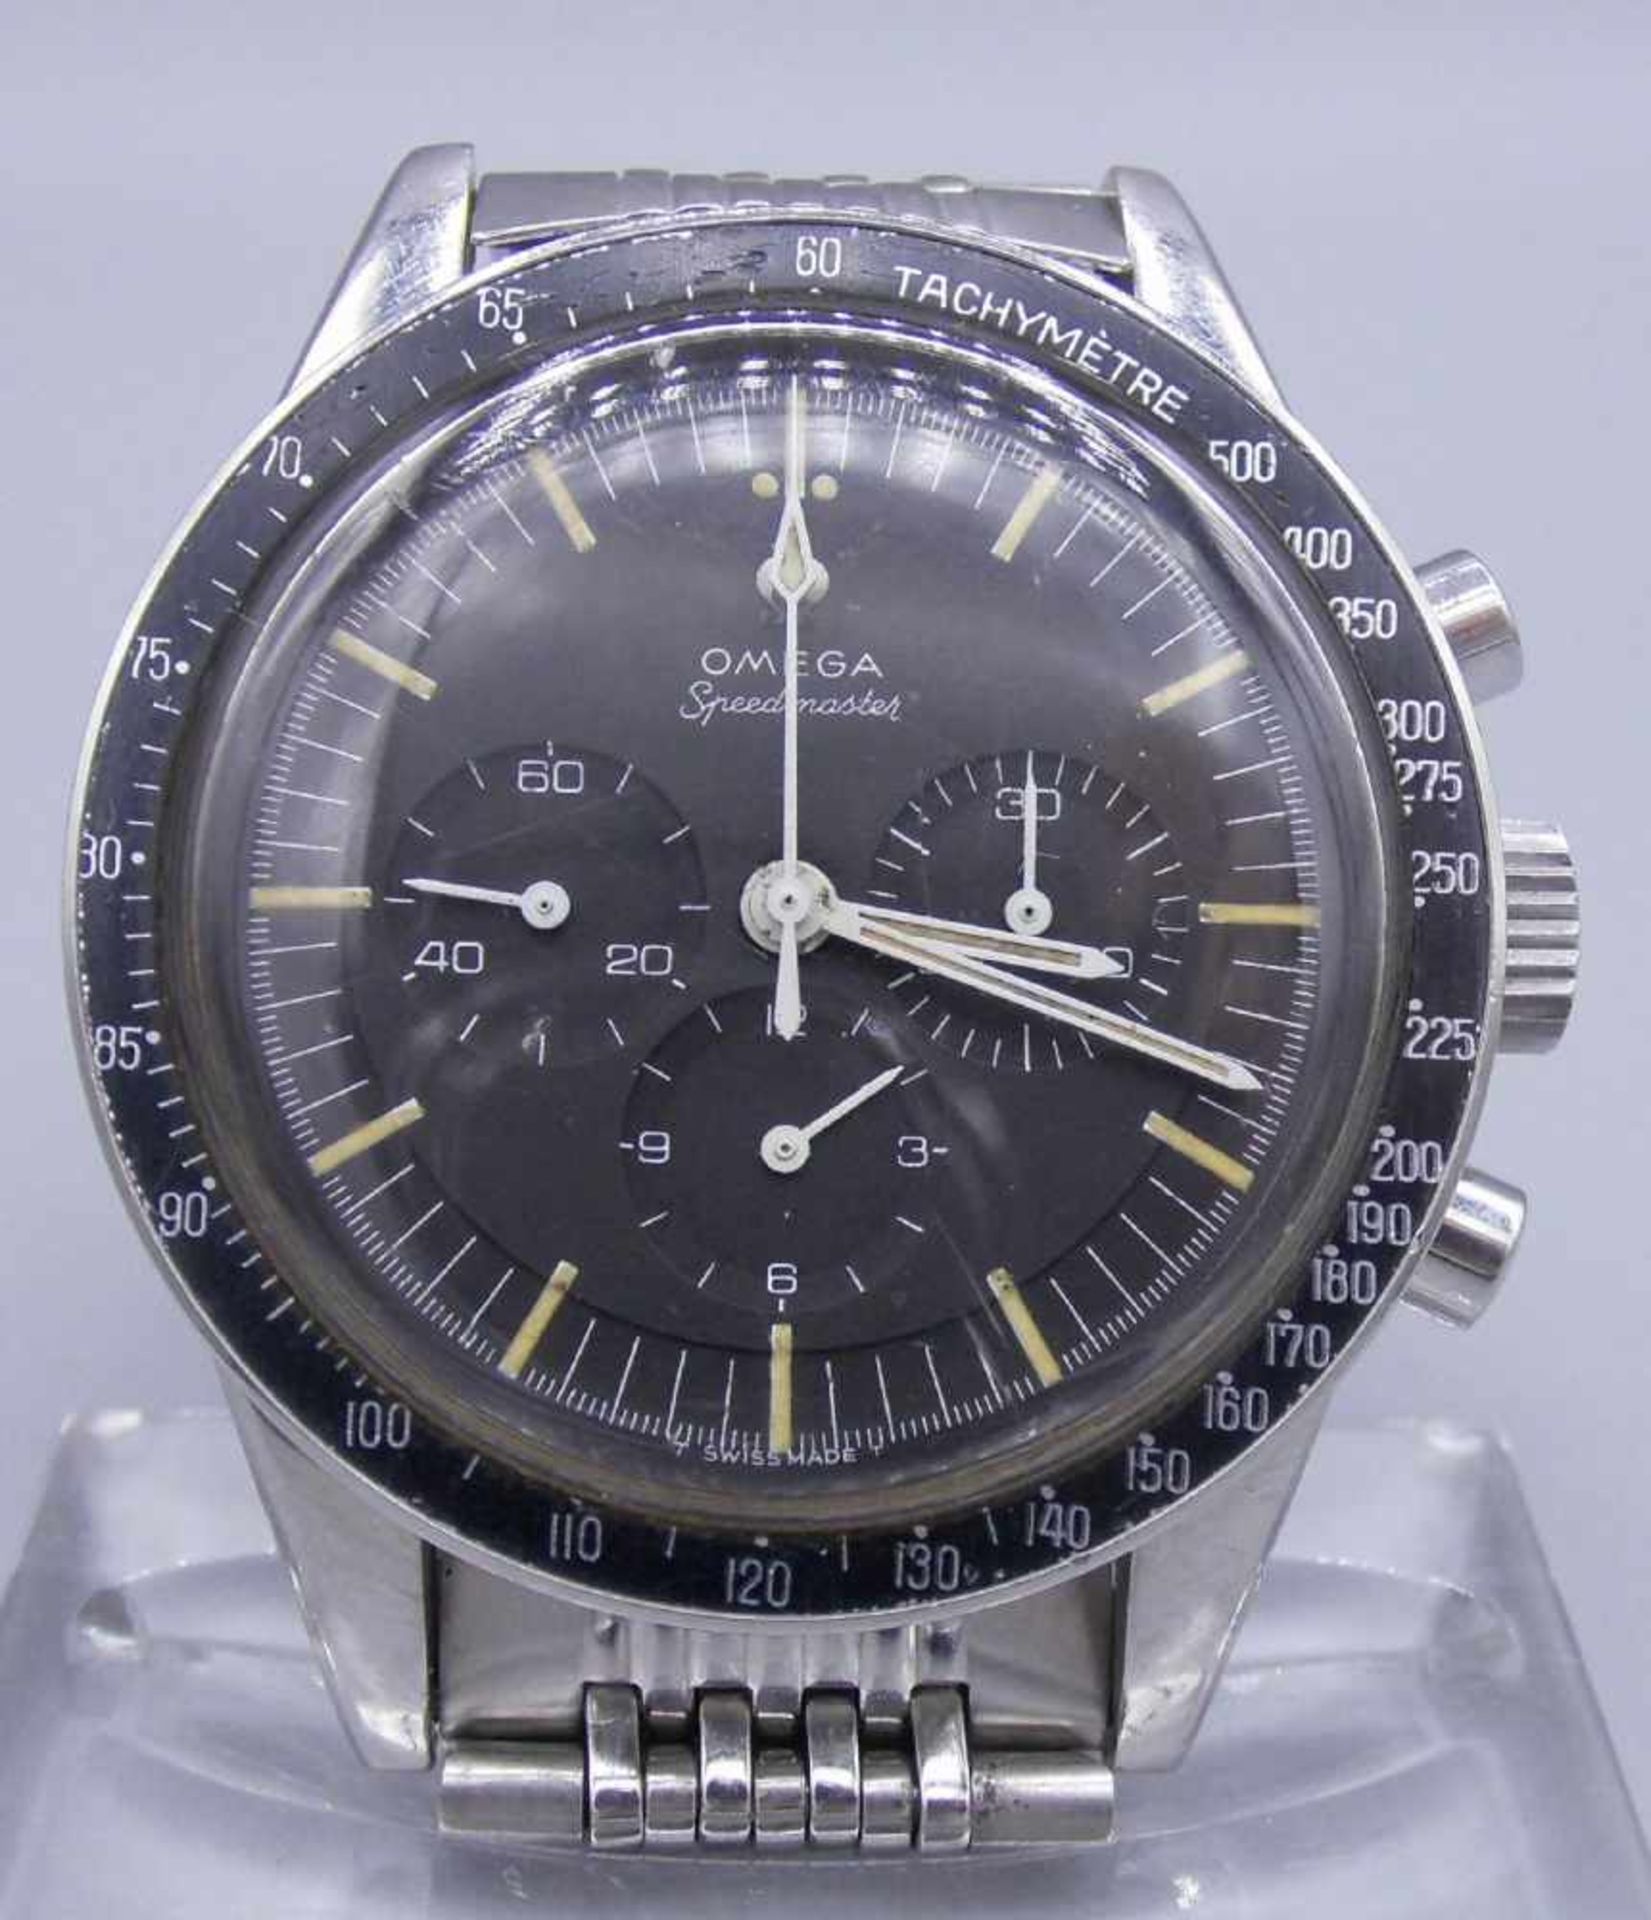 VINTAGE ARMBANDUHR / CHRONOGRAPH - Omega Speedmaster / wristwatch, Handaufzug, 1960er Jahre (